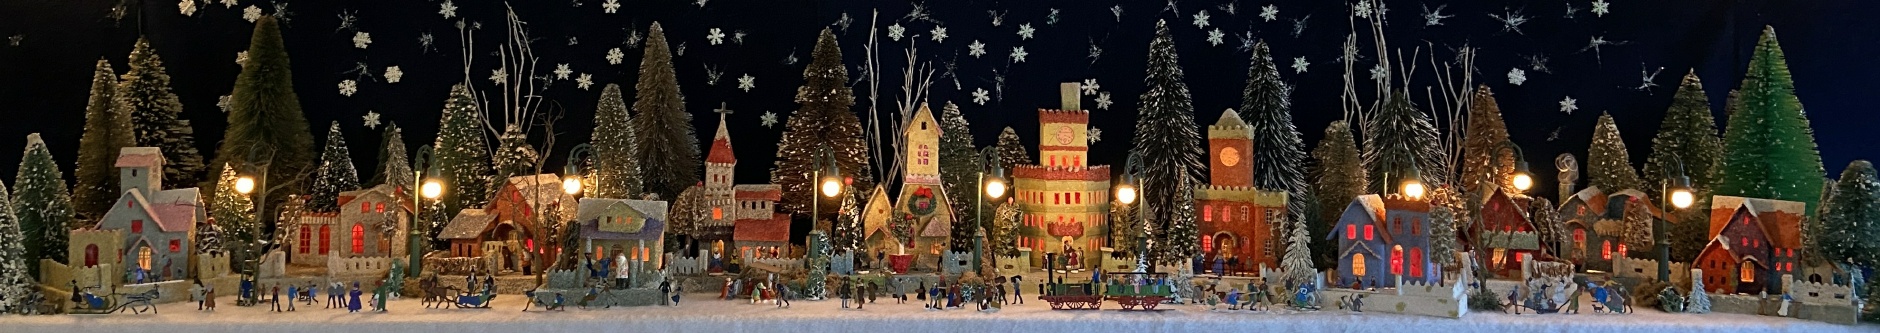 Antique Christmas cardboard house putz (village) on fireplace mantel at night (280K)